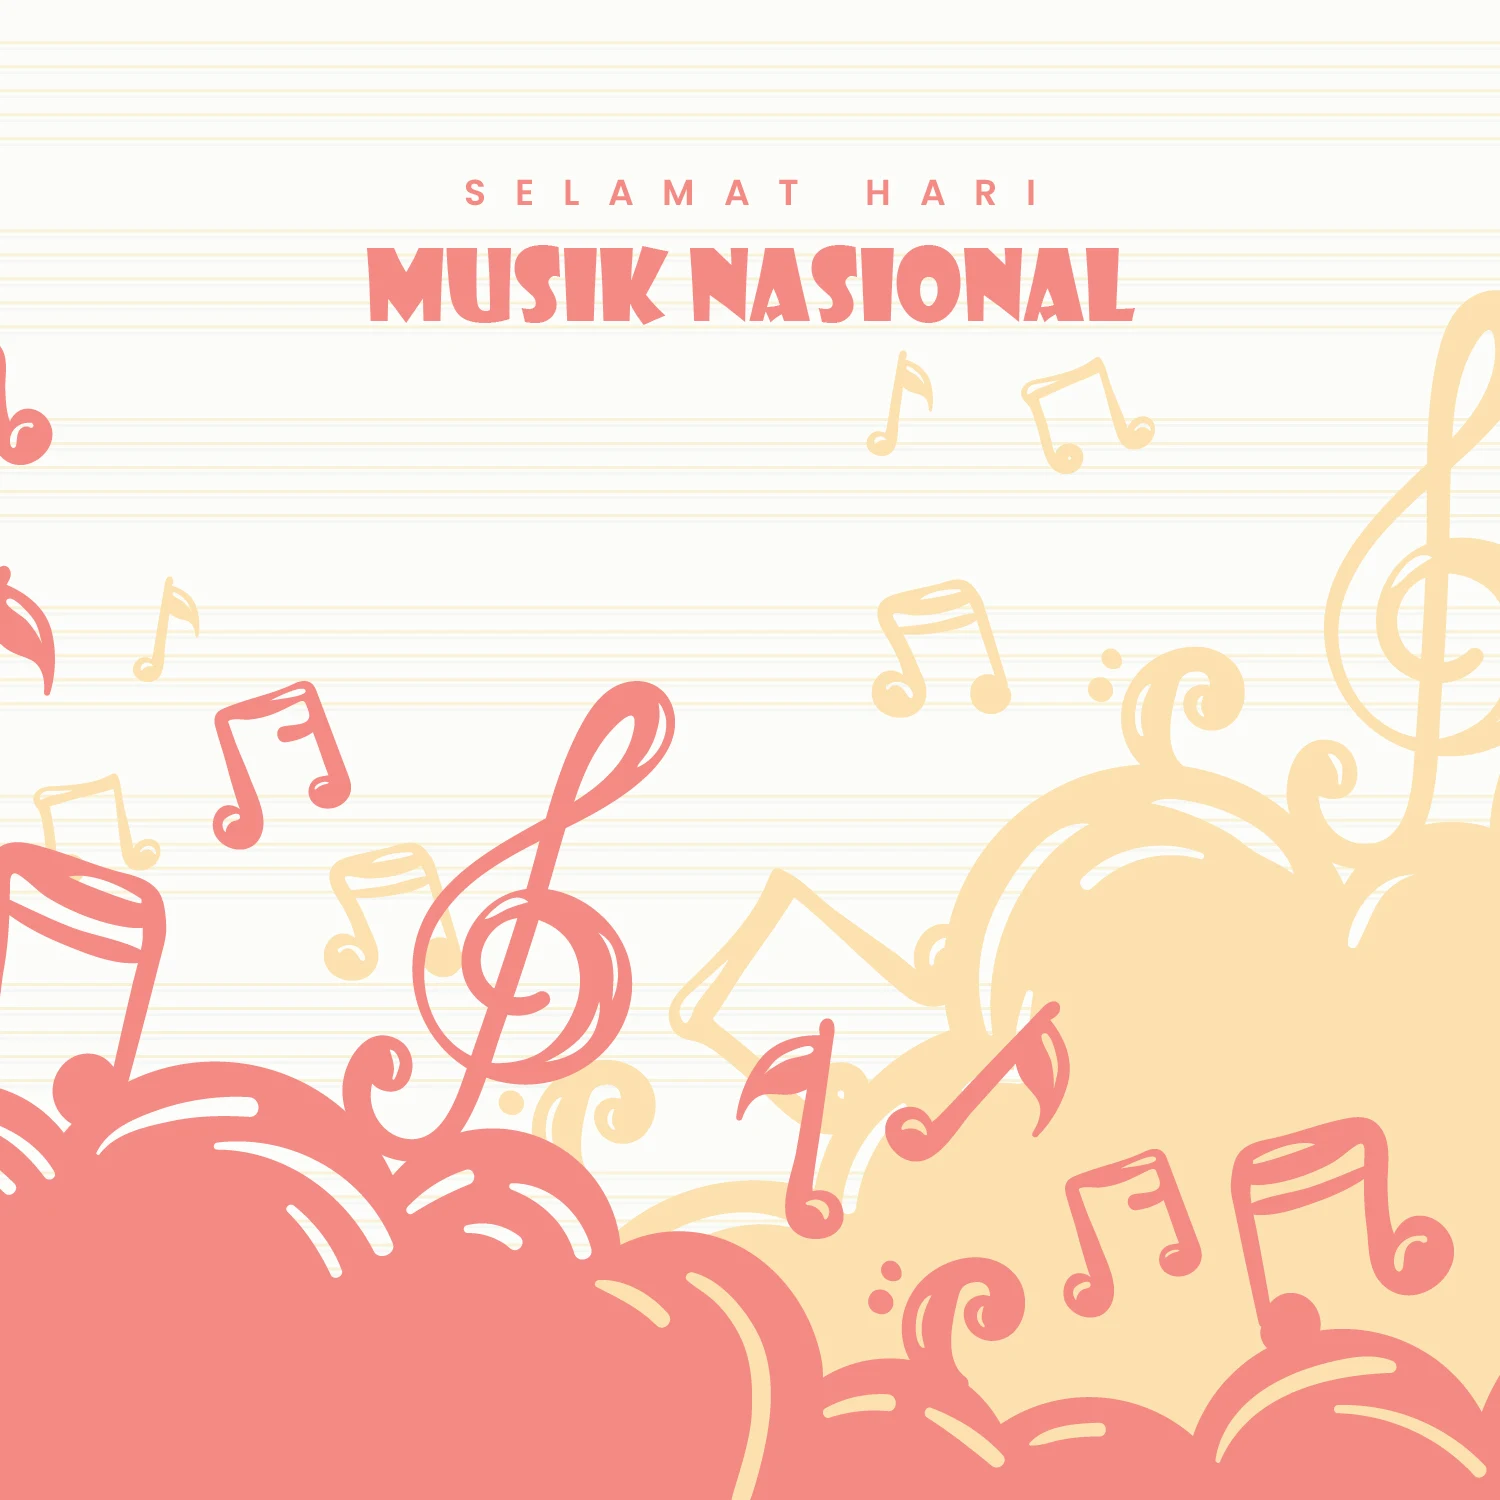 Kumpulan Poster Ucapan Selamat Hari Musik Nasional